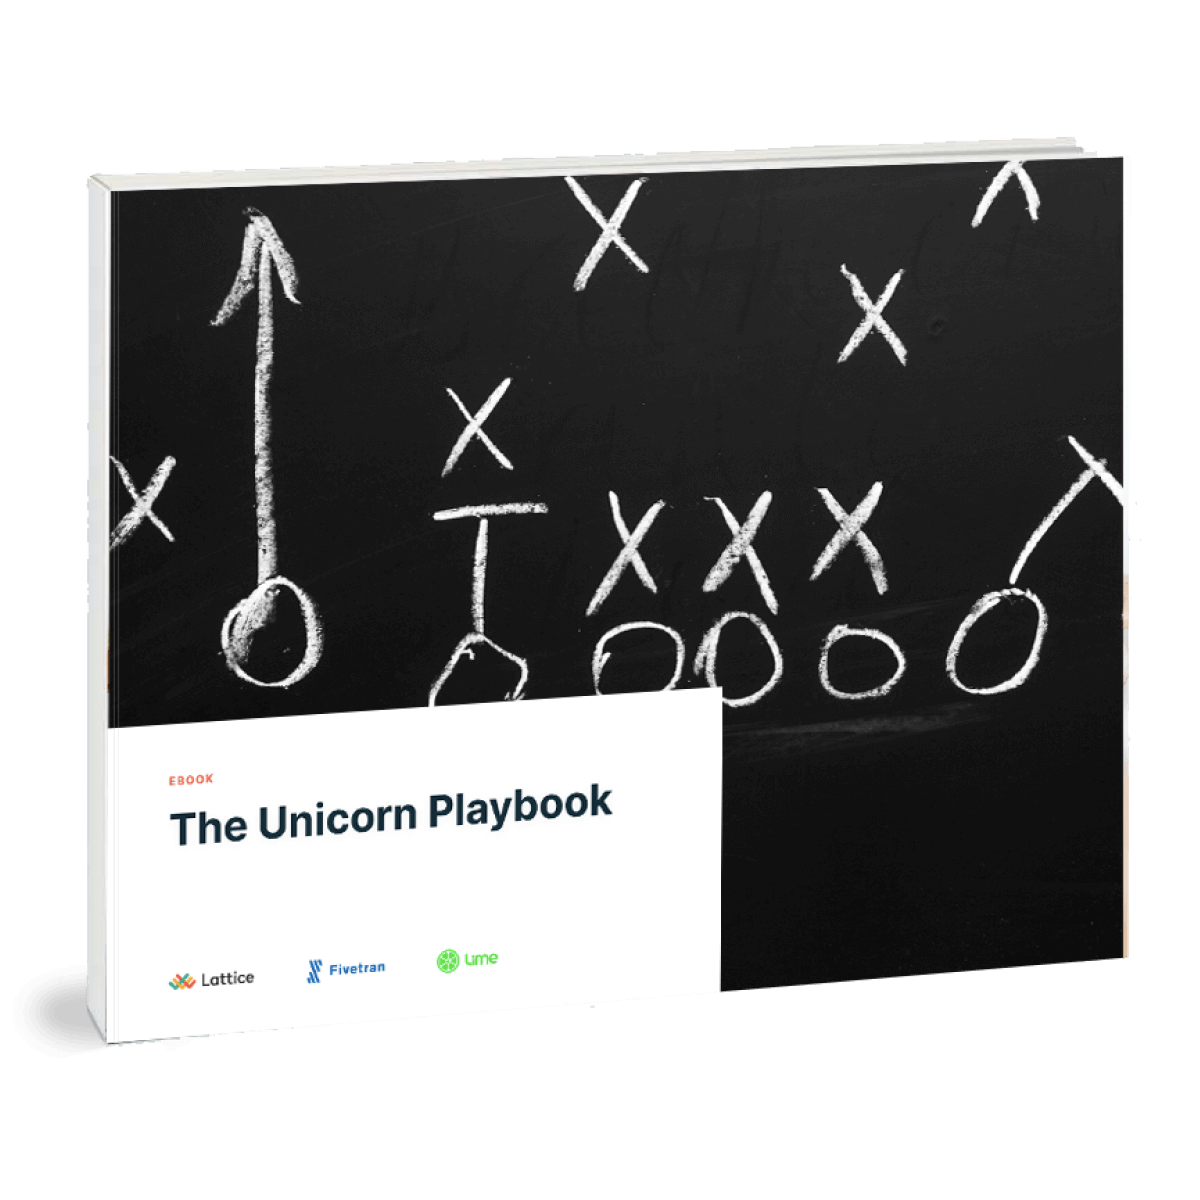 The Unicorn Playbook Volume 1